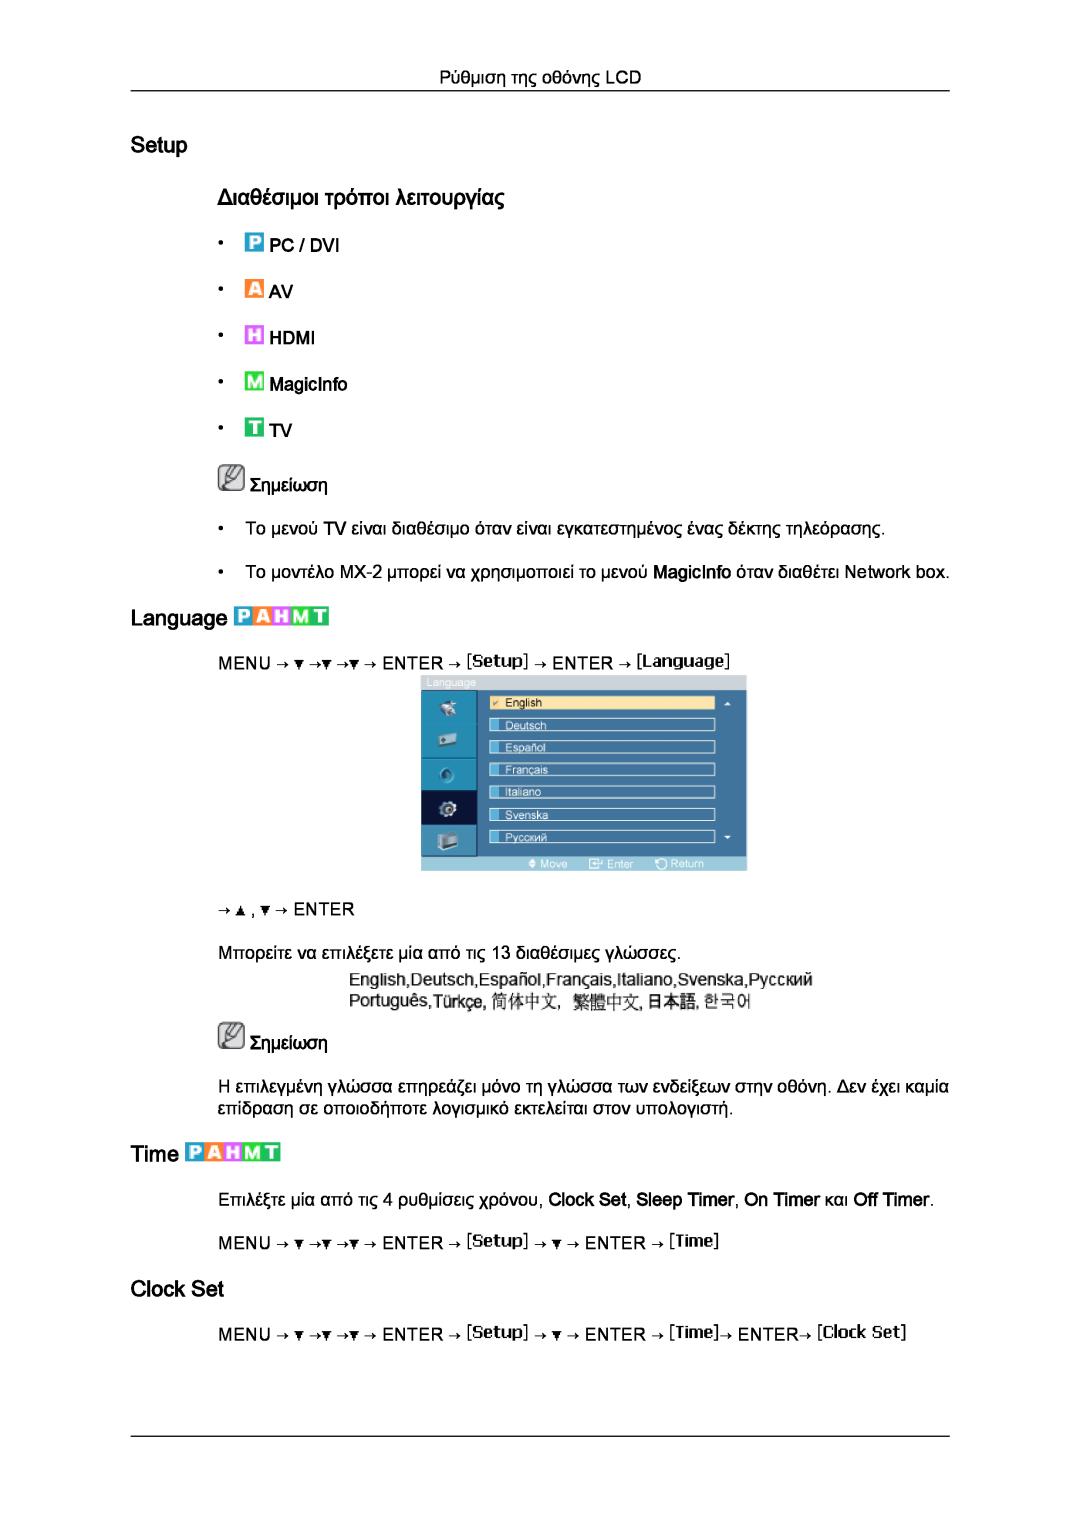 Samsung LH46MGQLBC/EN, LH40MGULBC/EN manual Setup Διαθέσιμοι τρόποι λειτουργίας, Language, Time, Clock Set, Σημείωση 